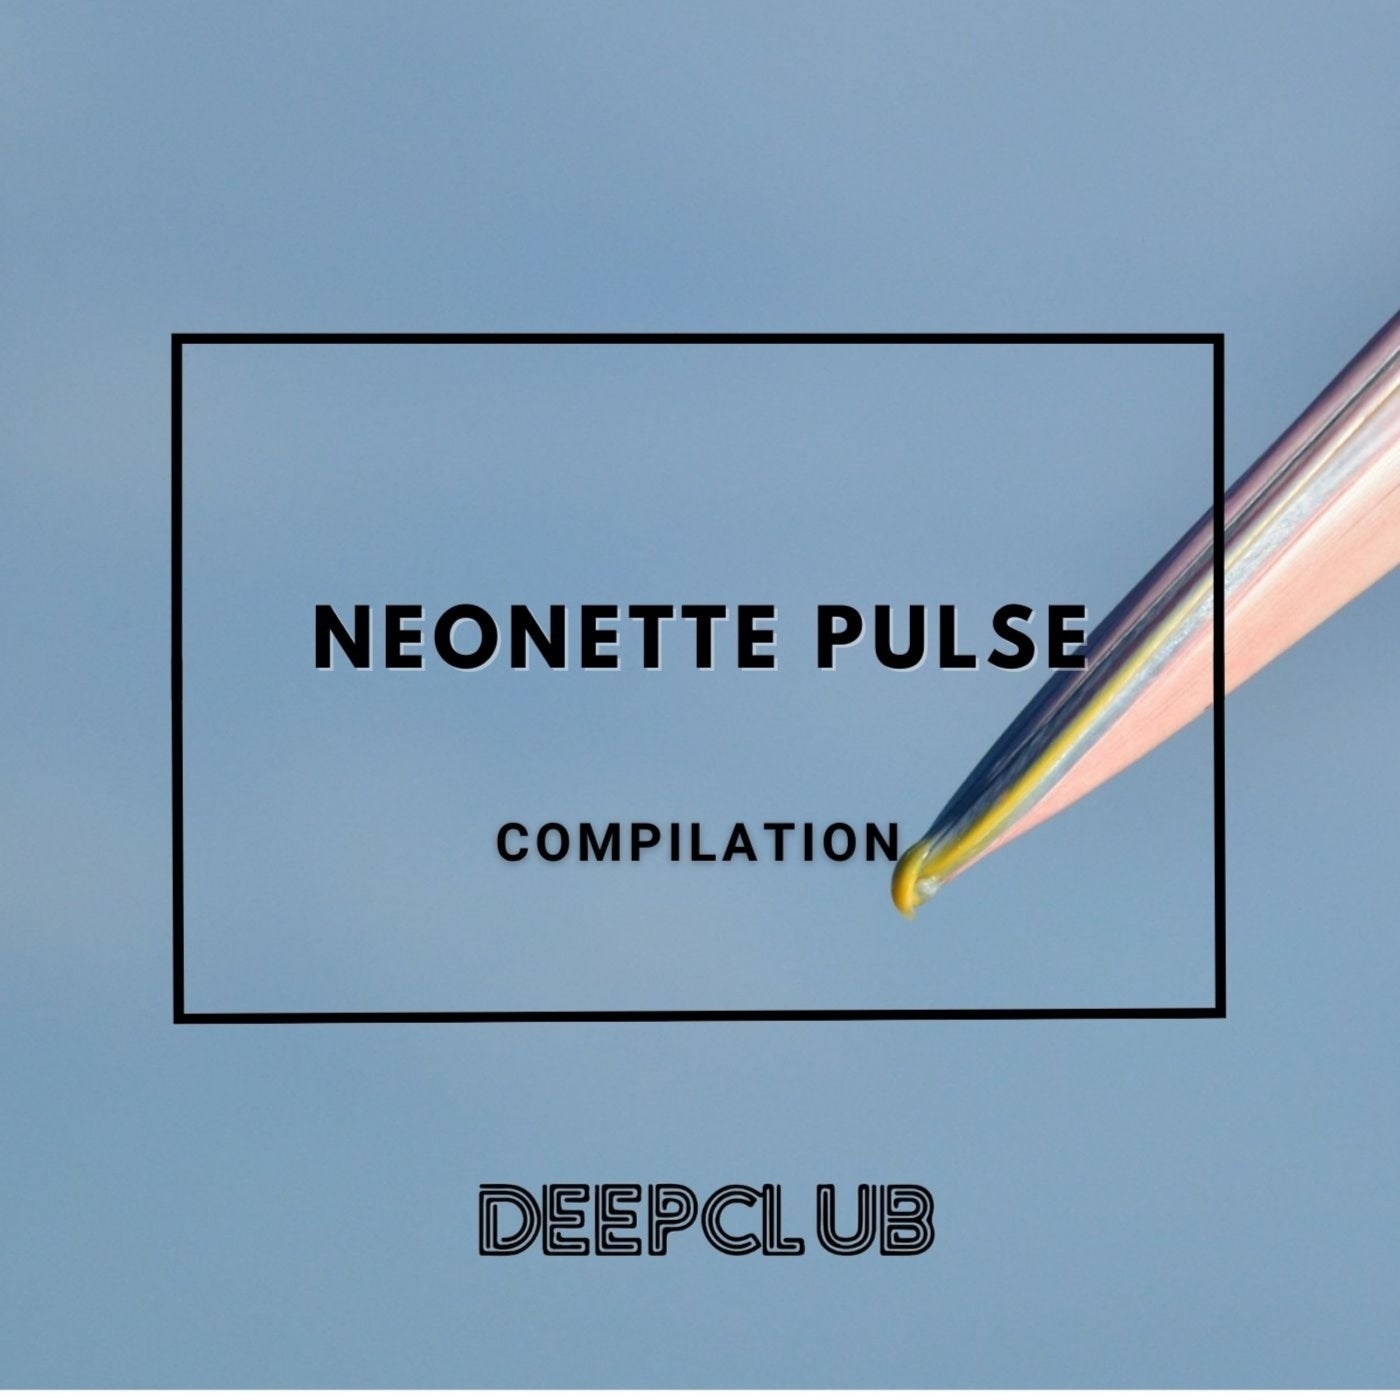 Neonette Pulse